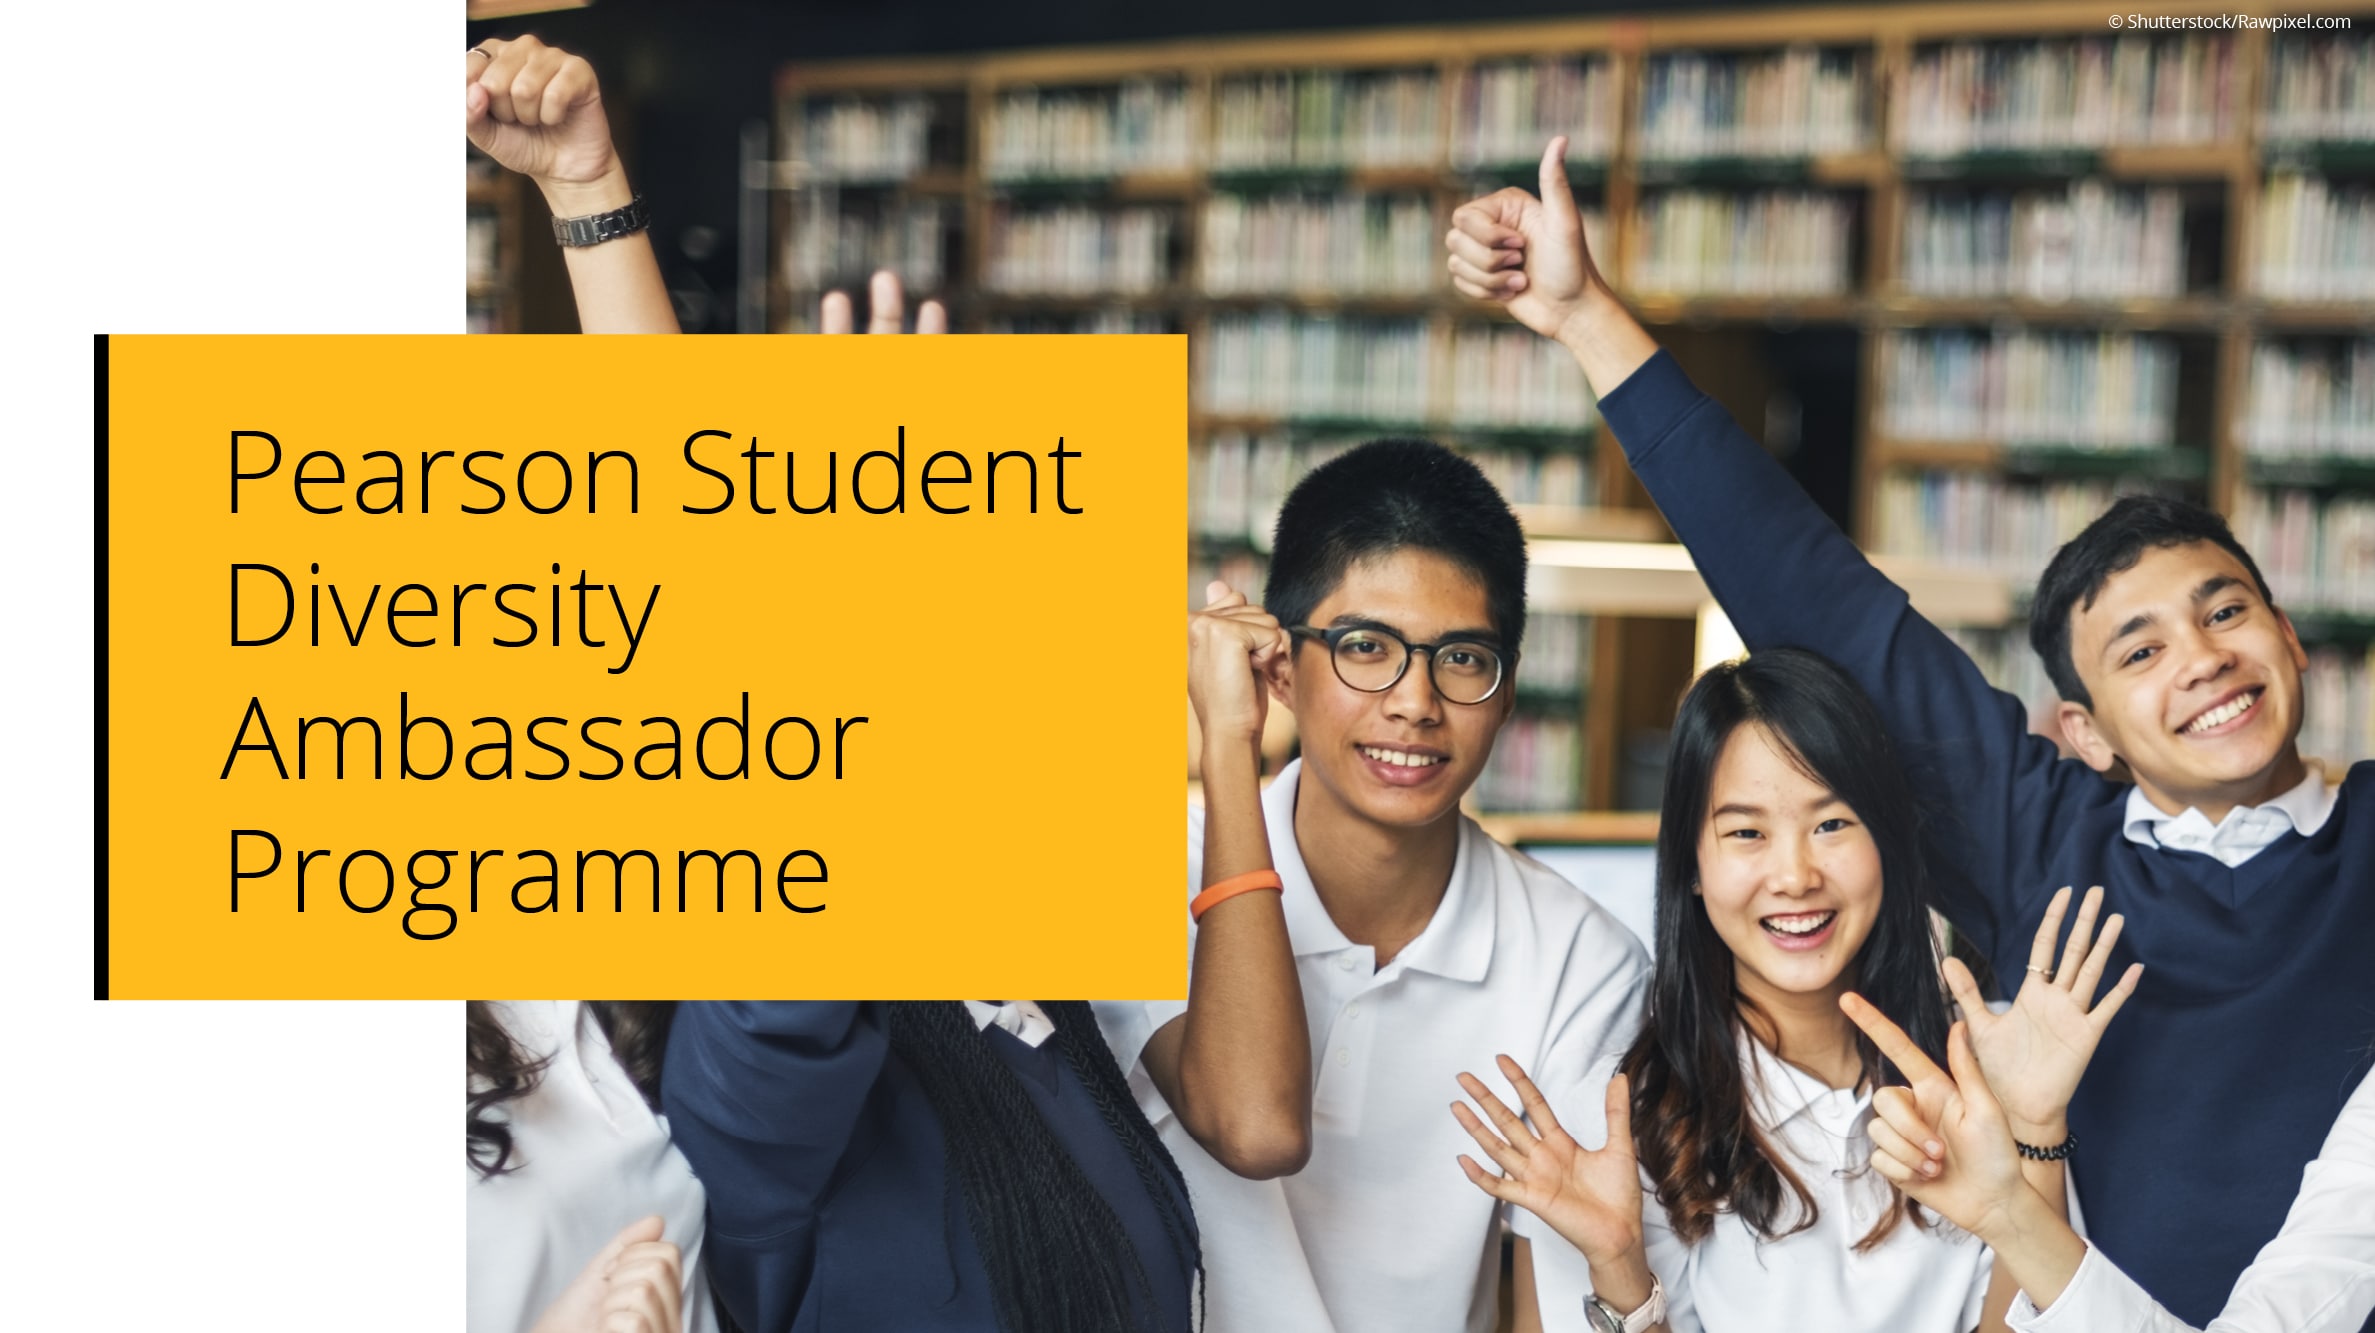 Pearson Student Diversity Ambassador Programme